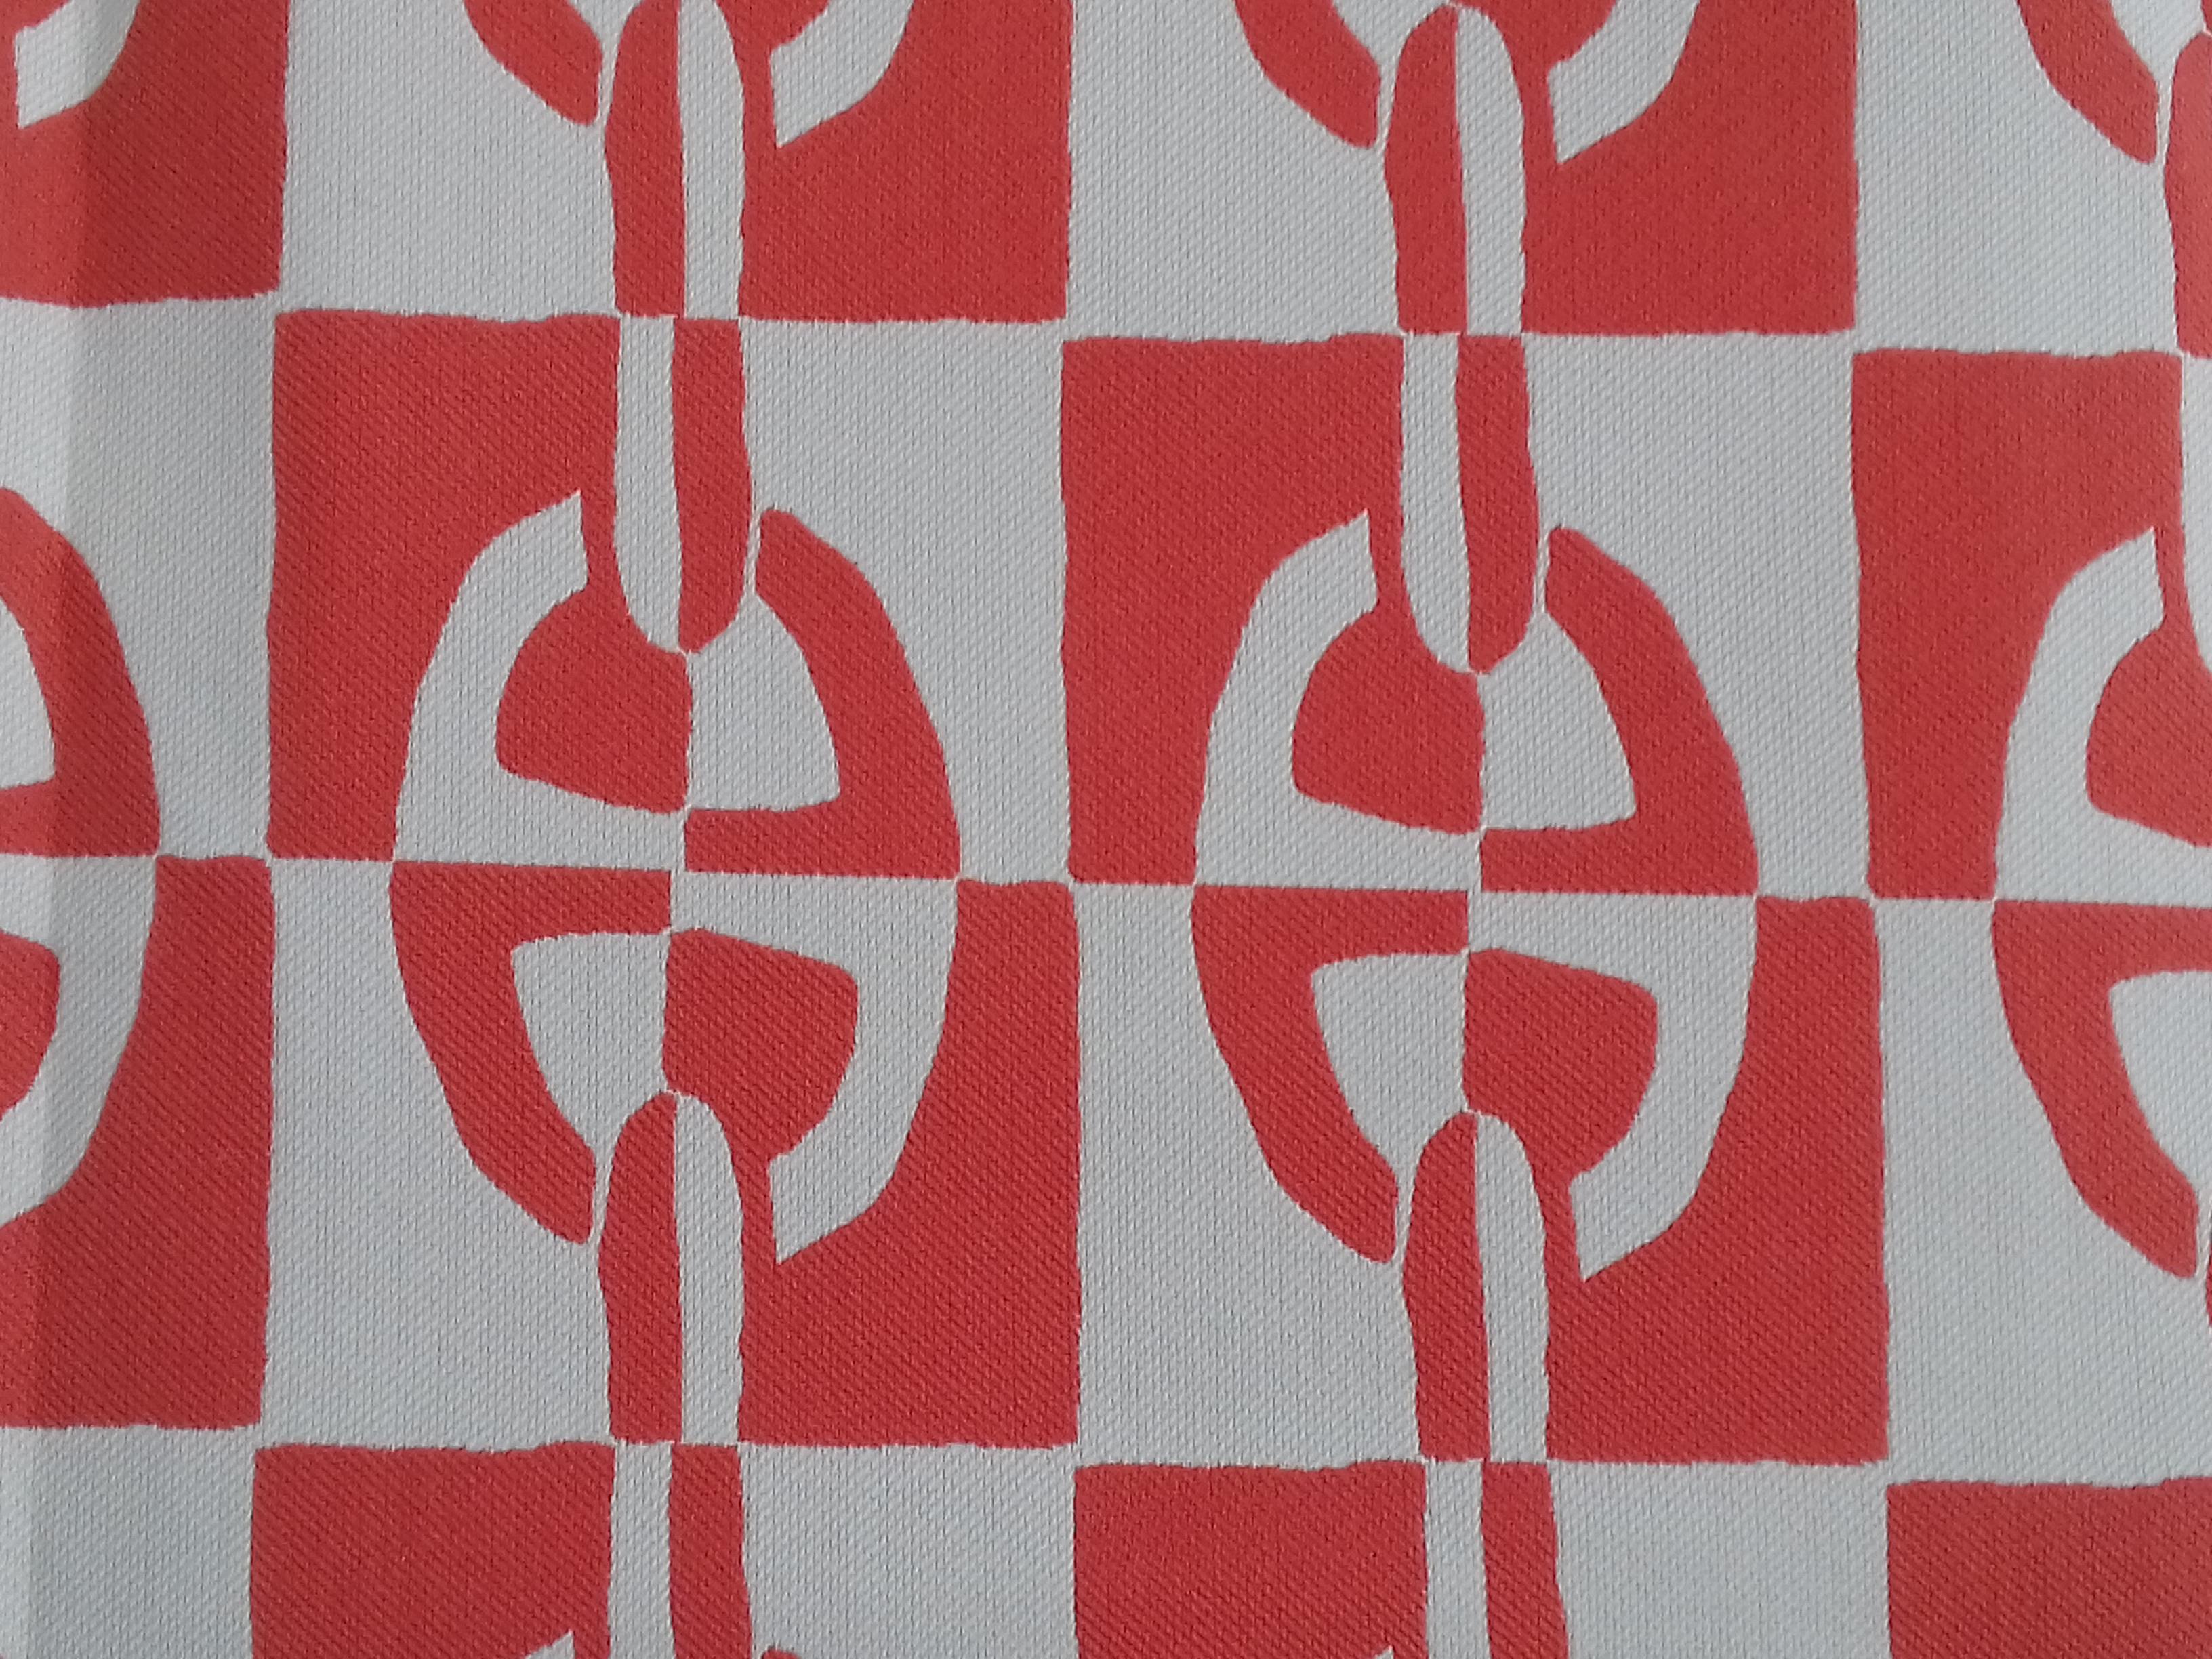 Hermès Piece of Tissue Fabric Optique Chaine Ancre Anchor Chain Pattern Cotton 1